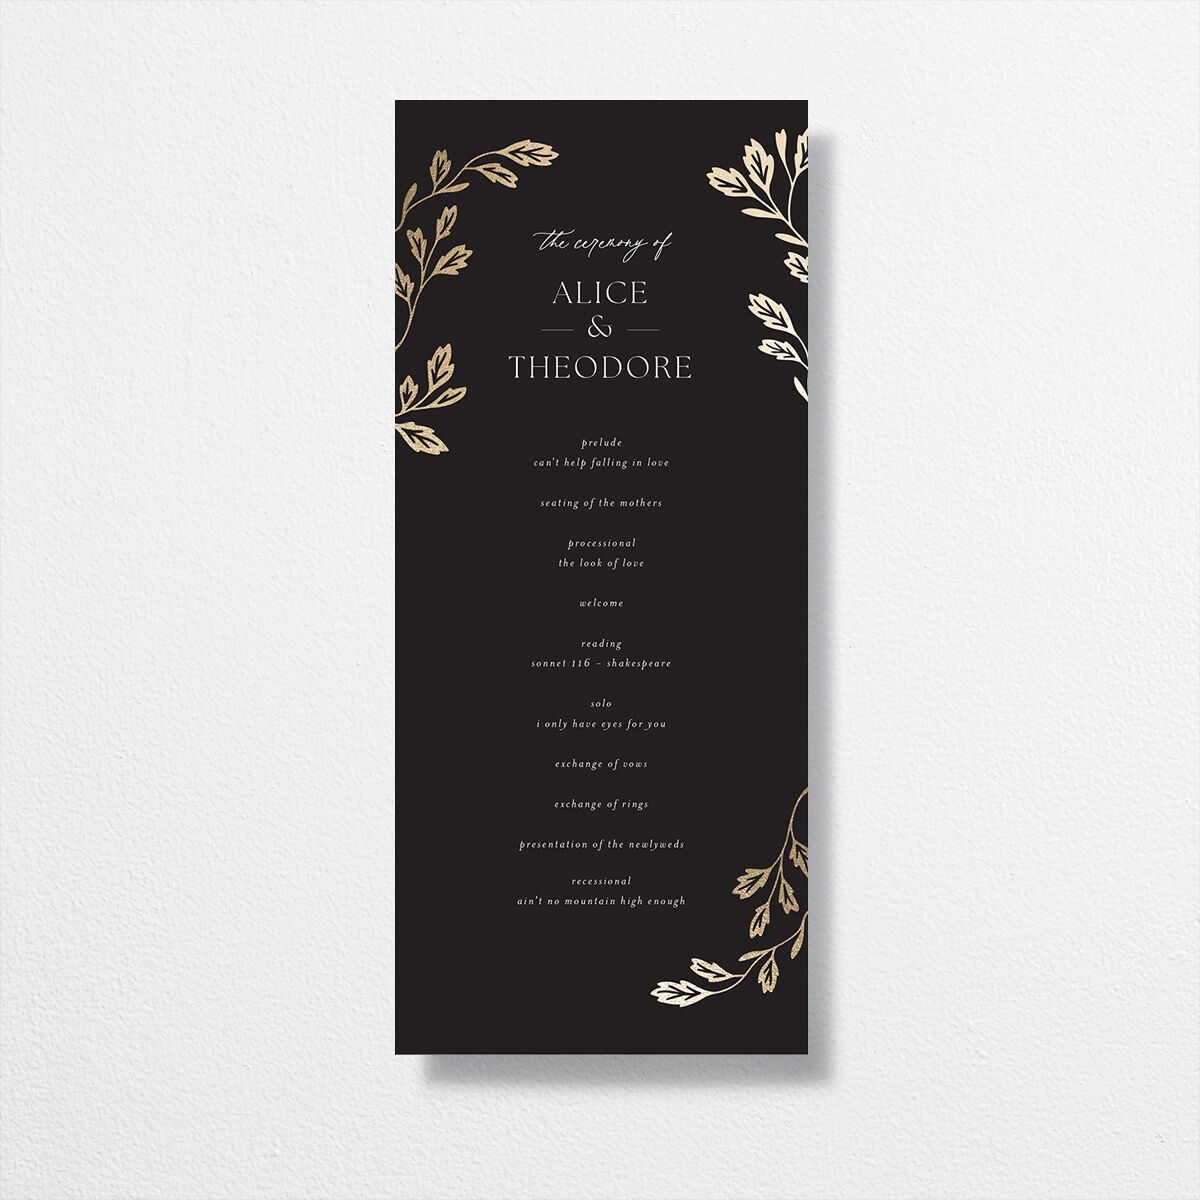 Arboretum Archway Wedding Programs front in black